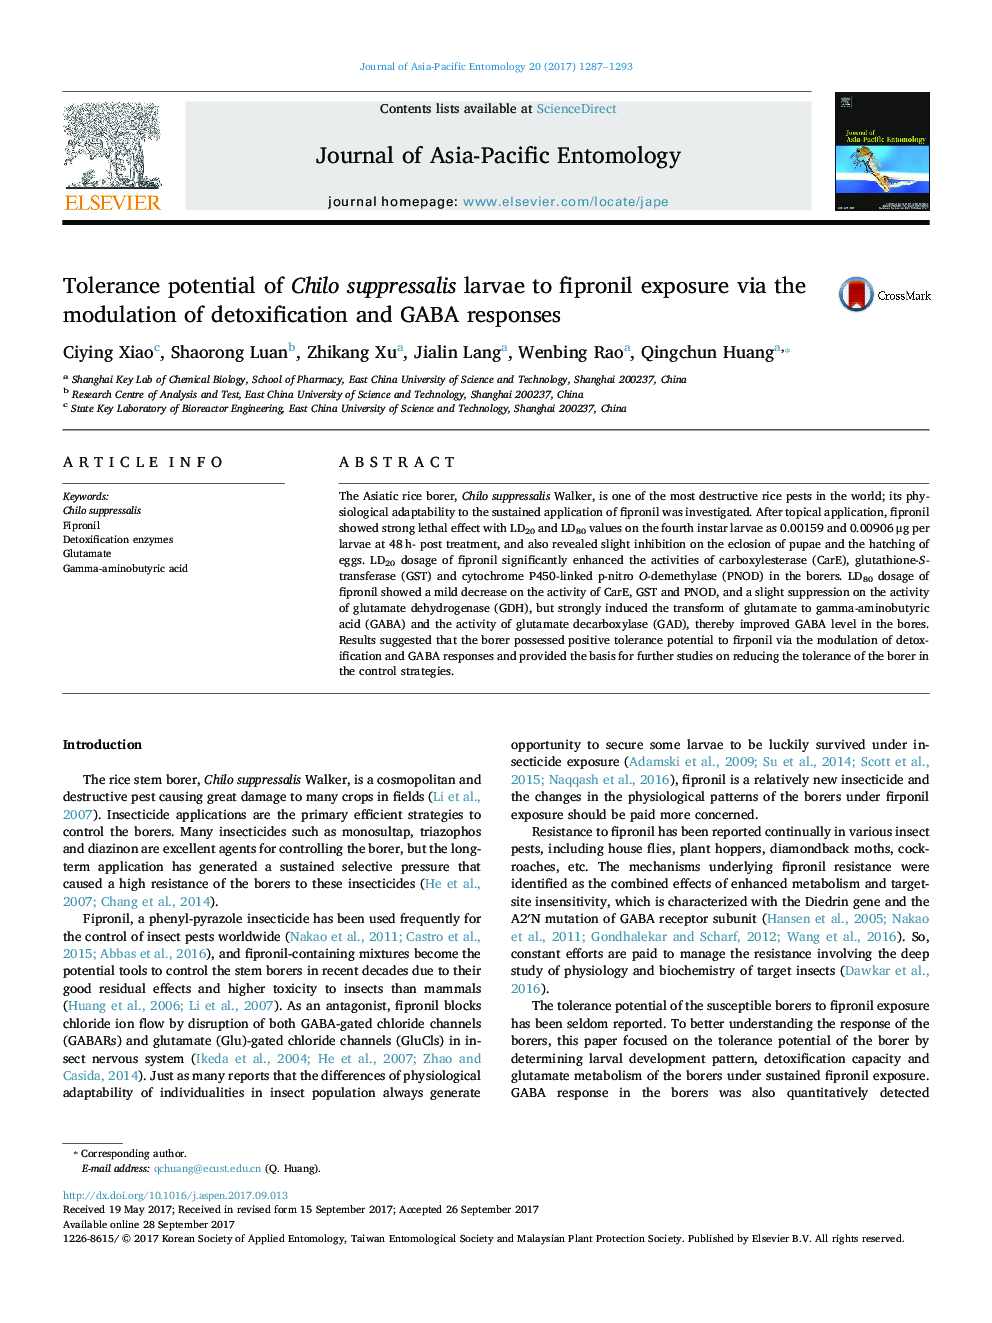 Tolerance potential of Chilo suppressalis larvae to fipronil exposure via the modulation of detoxification and GABA responses